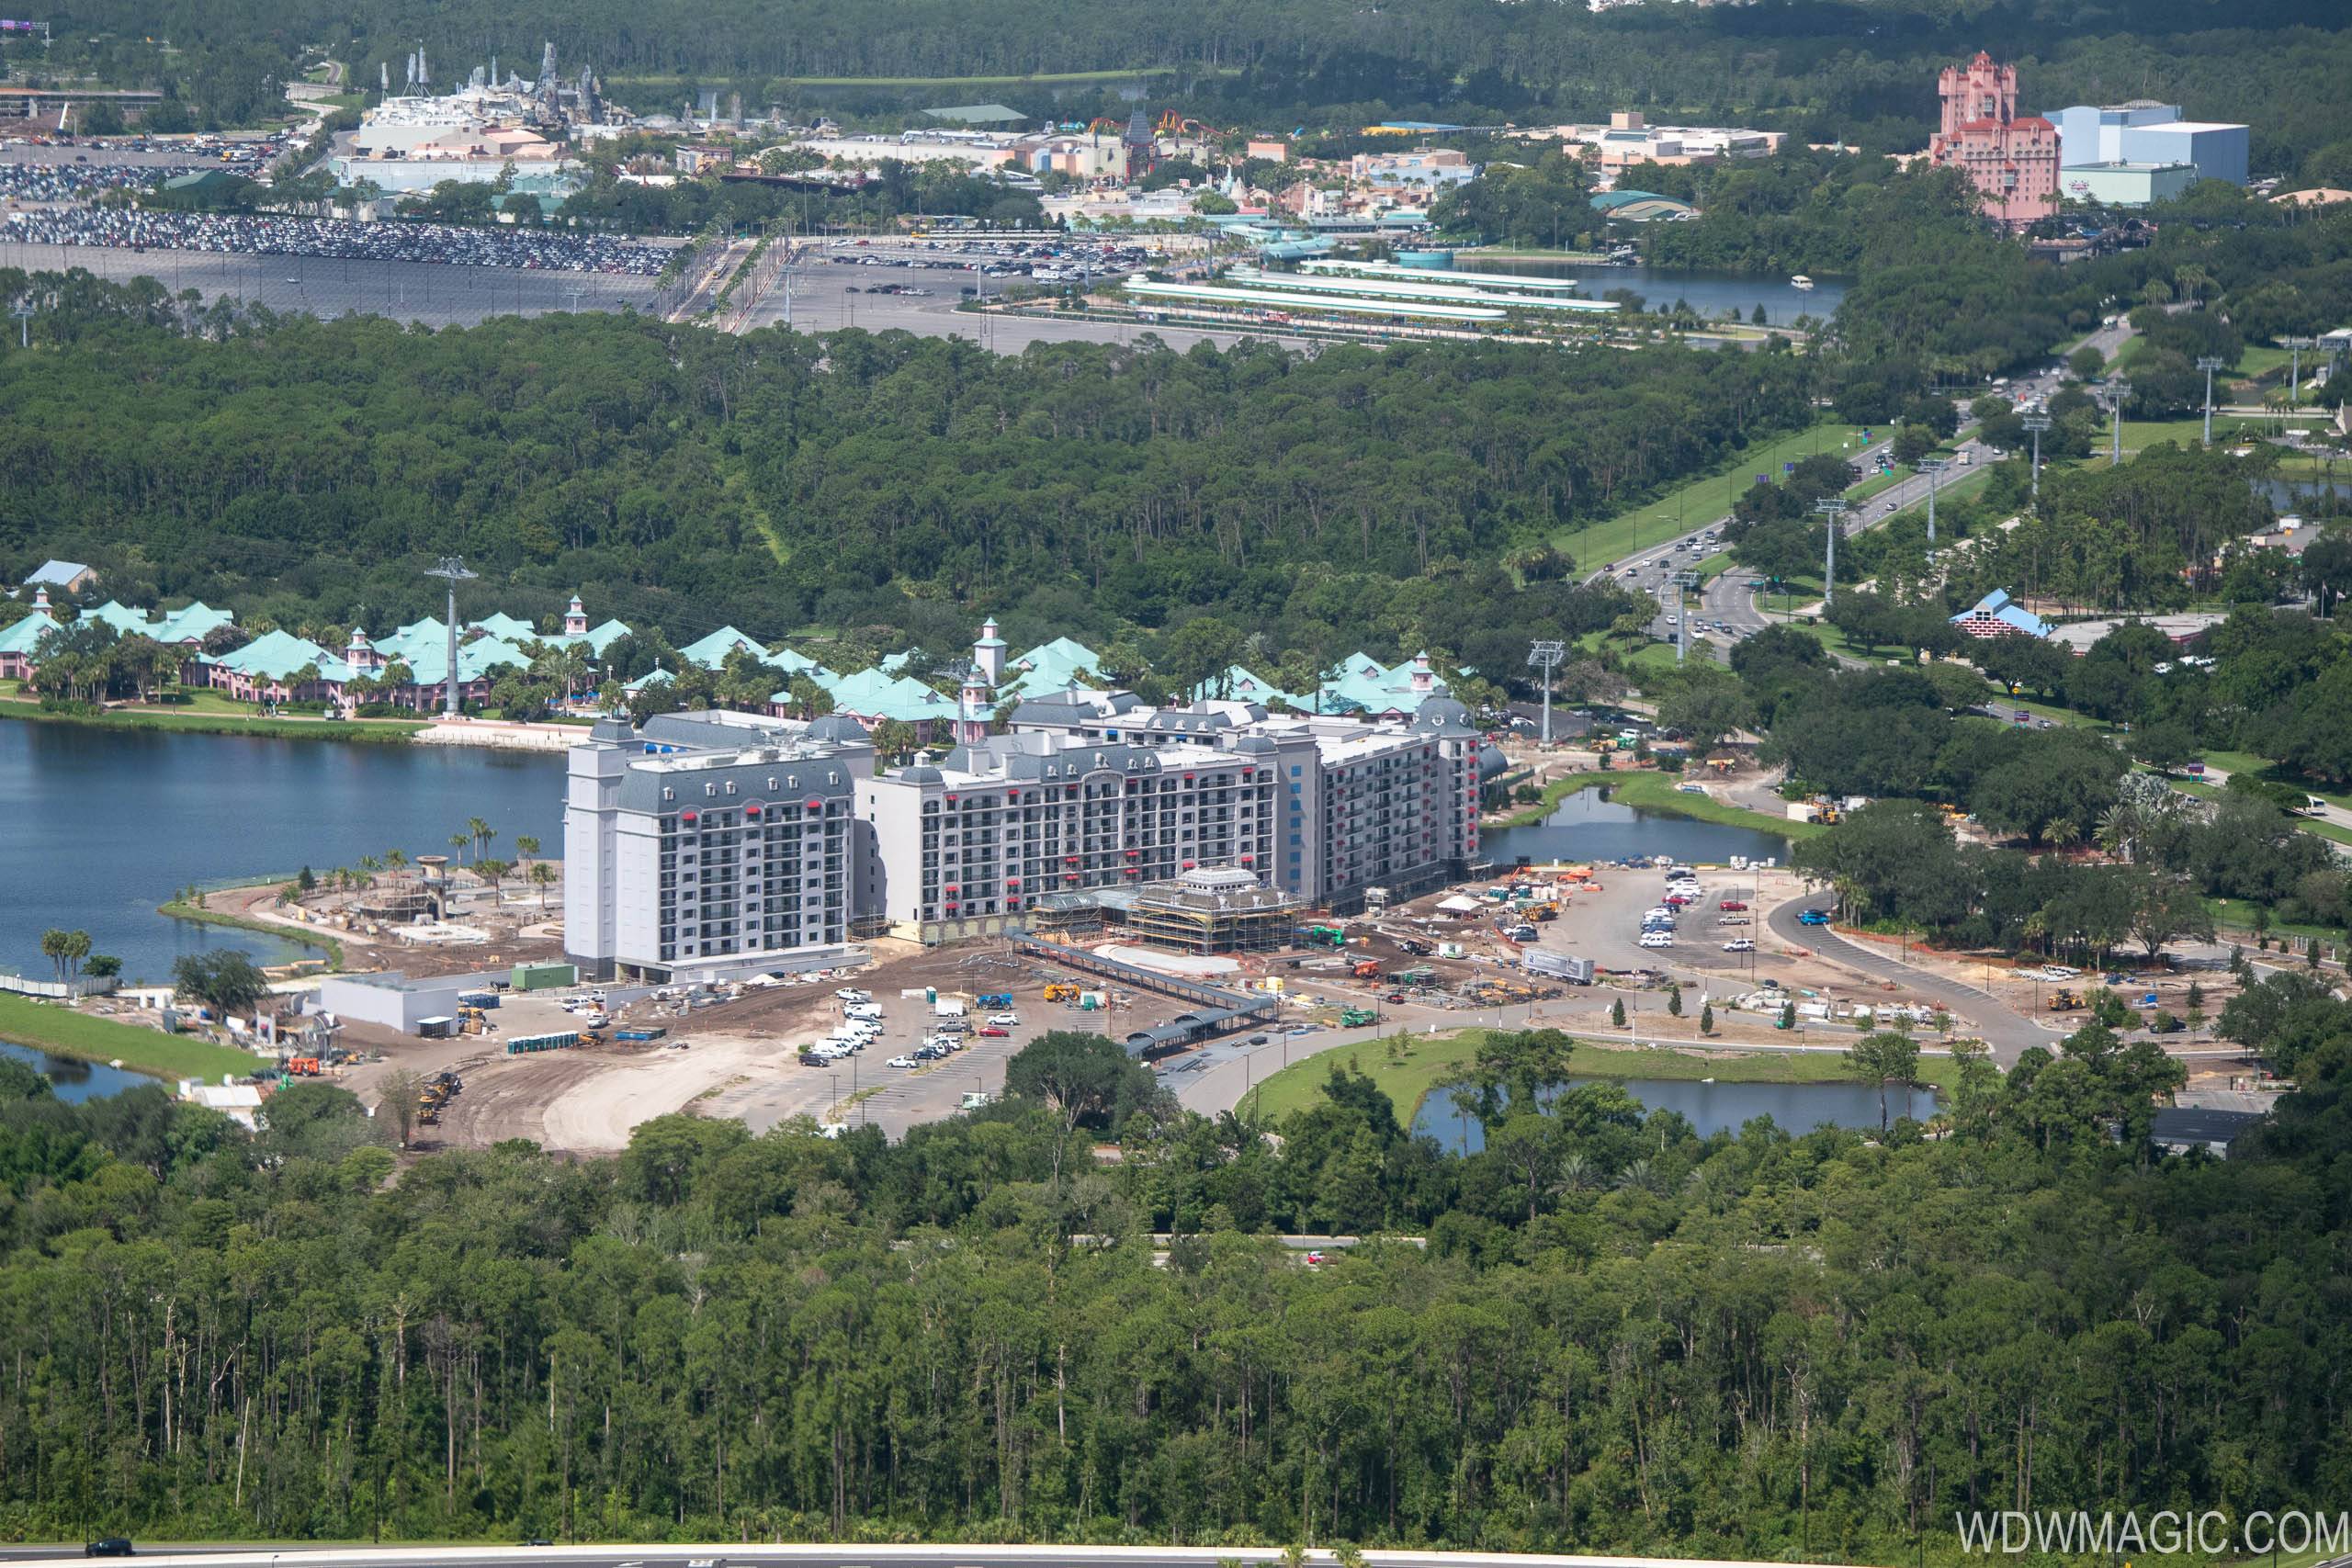 PHOTOS - Disney's Riviera resort construction update